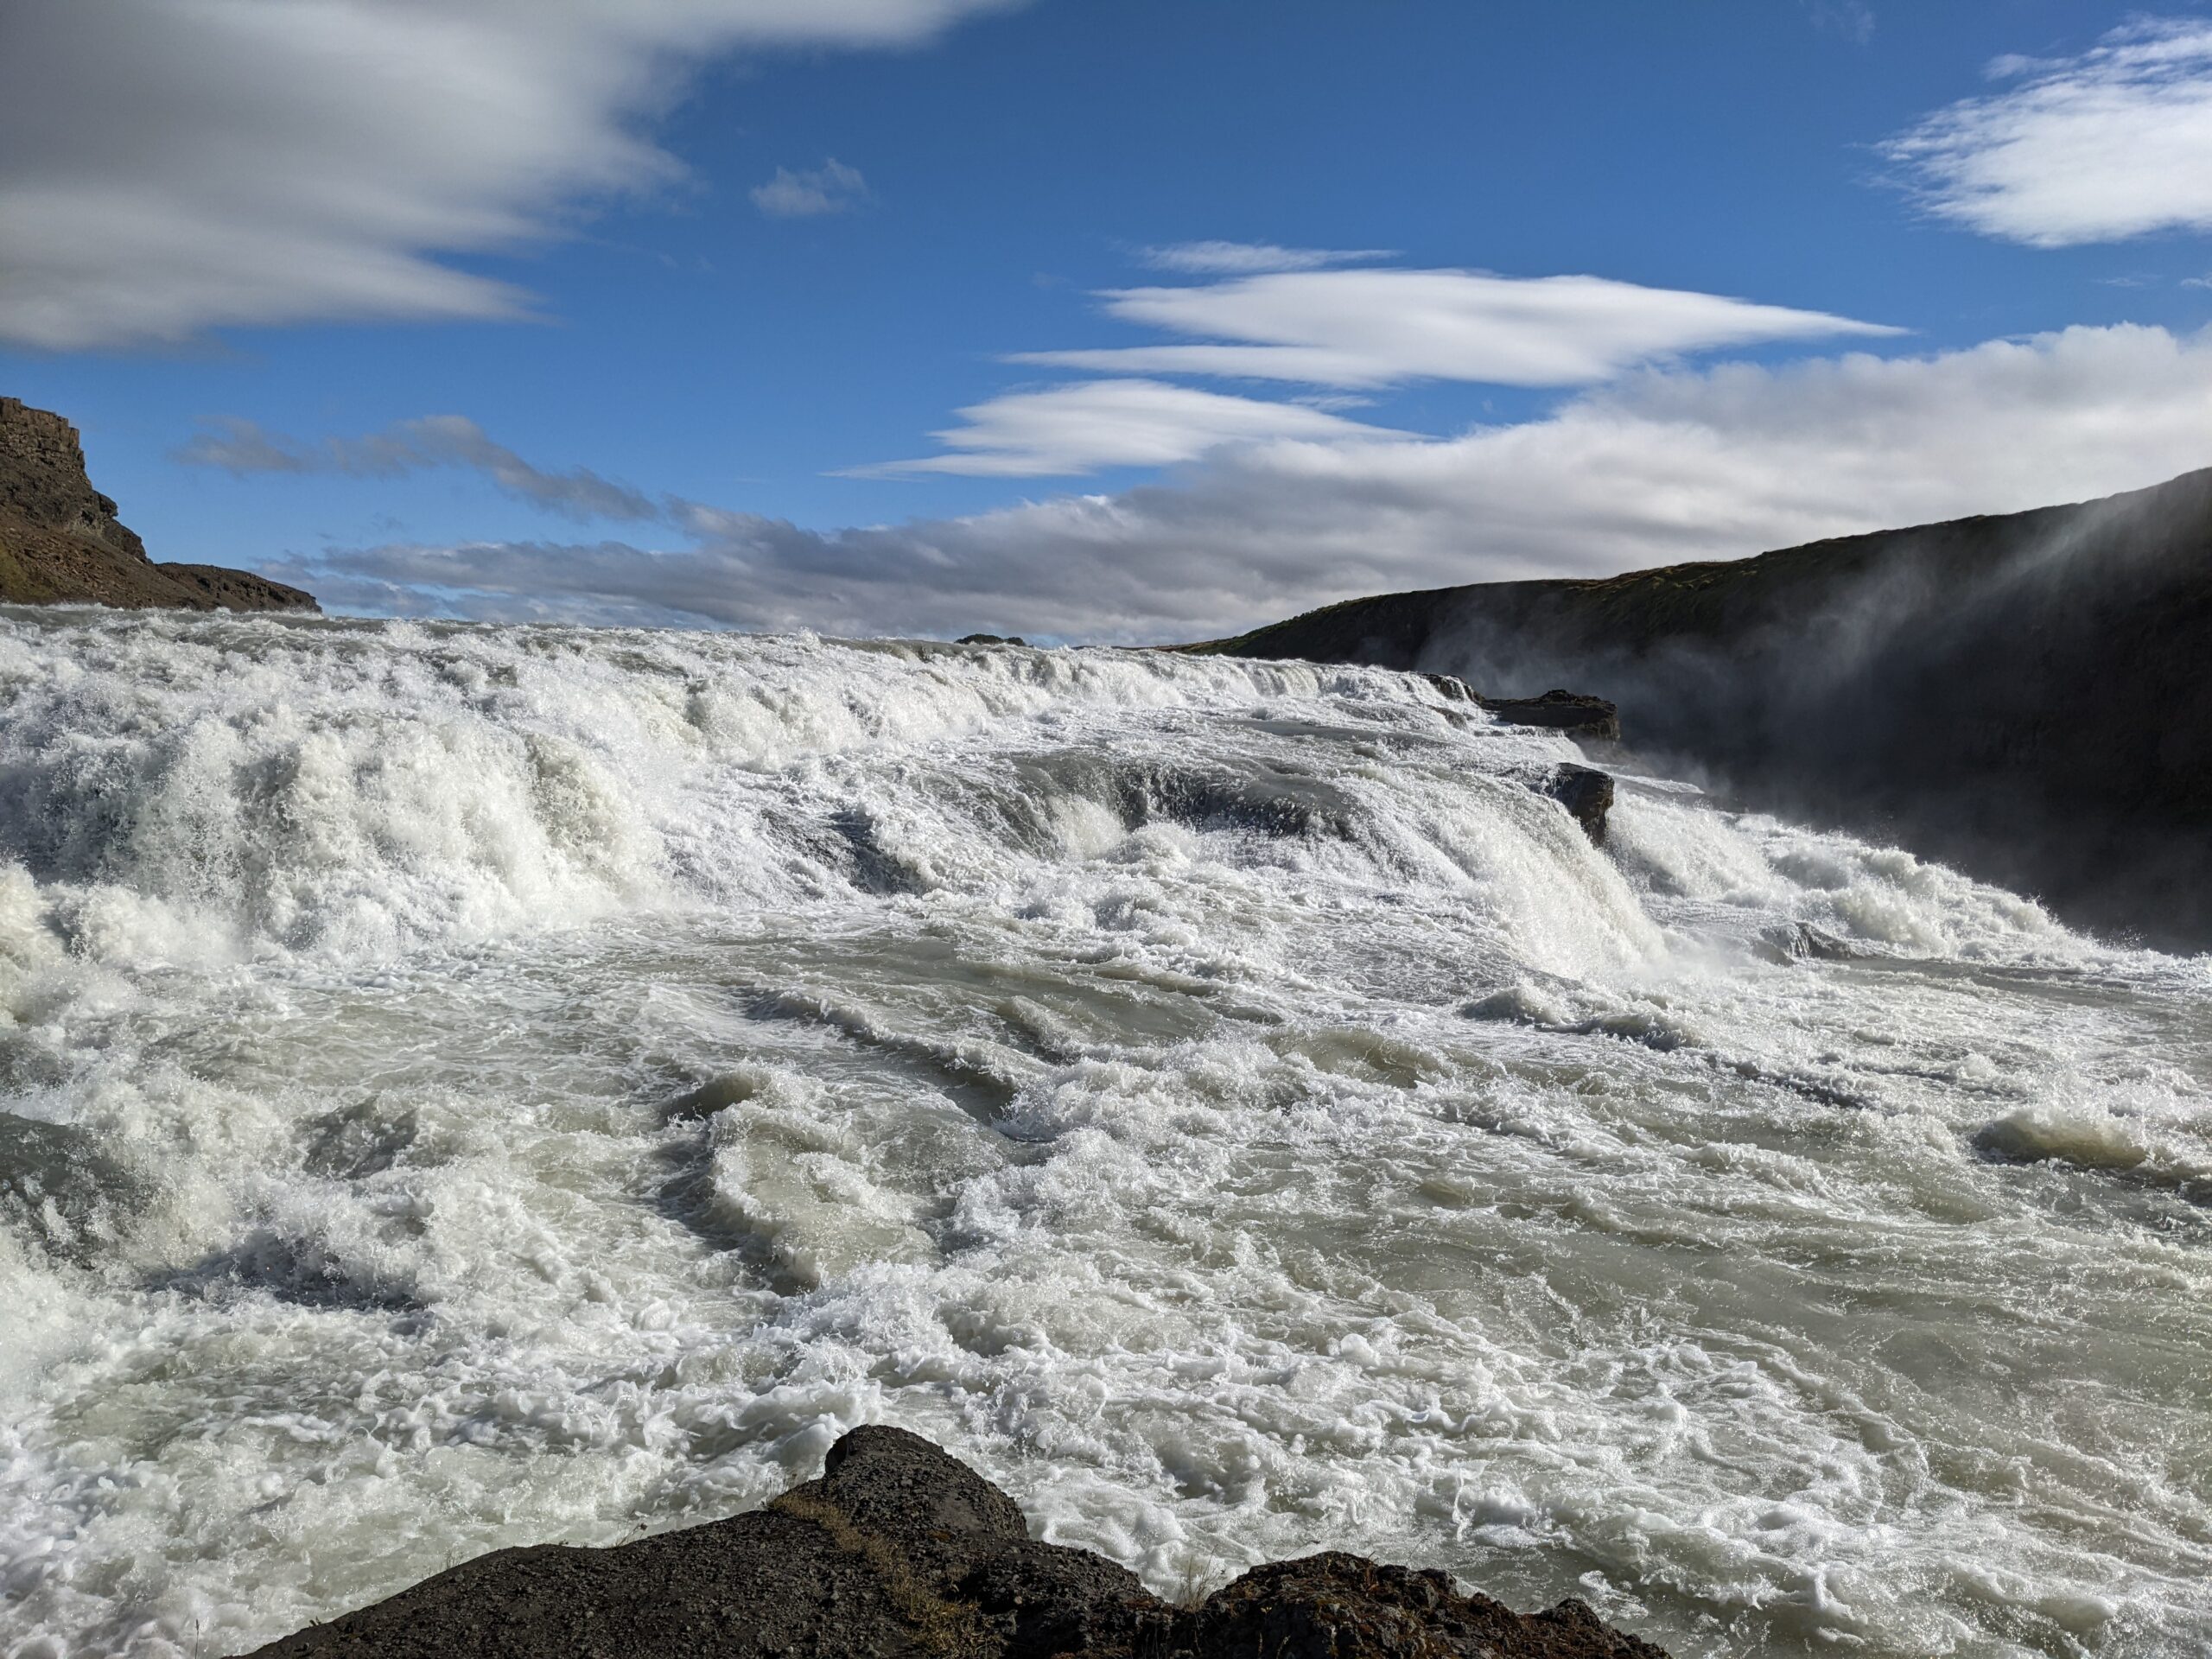 Gullfoss Waterfall, Iceland